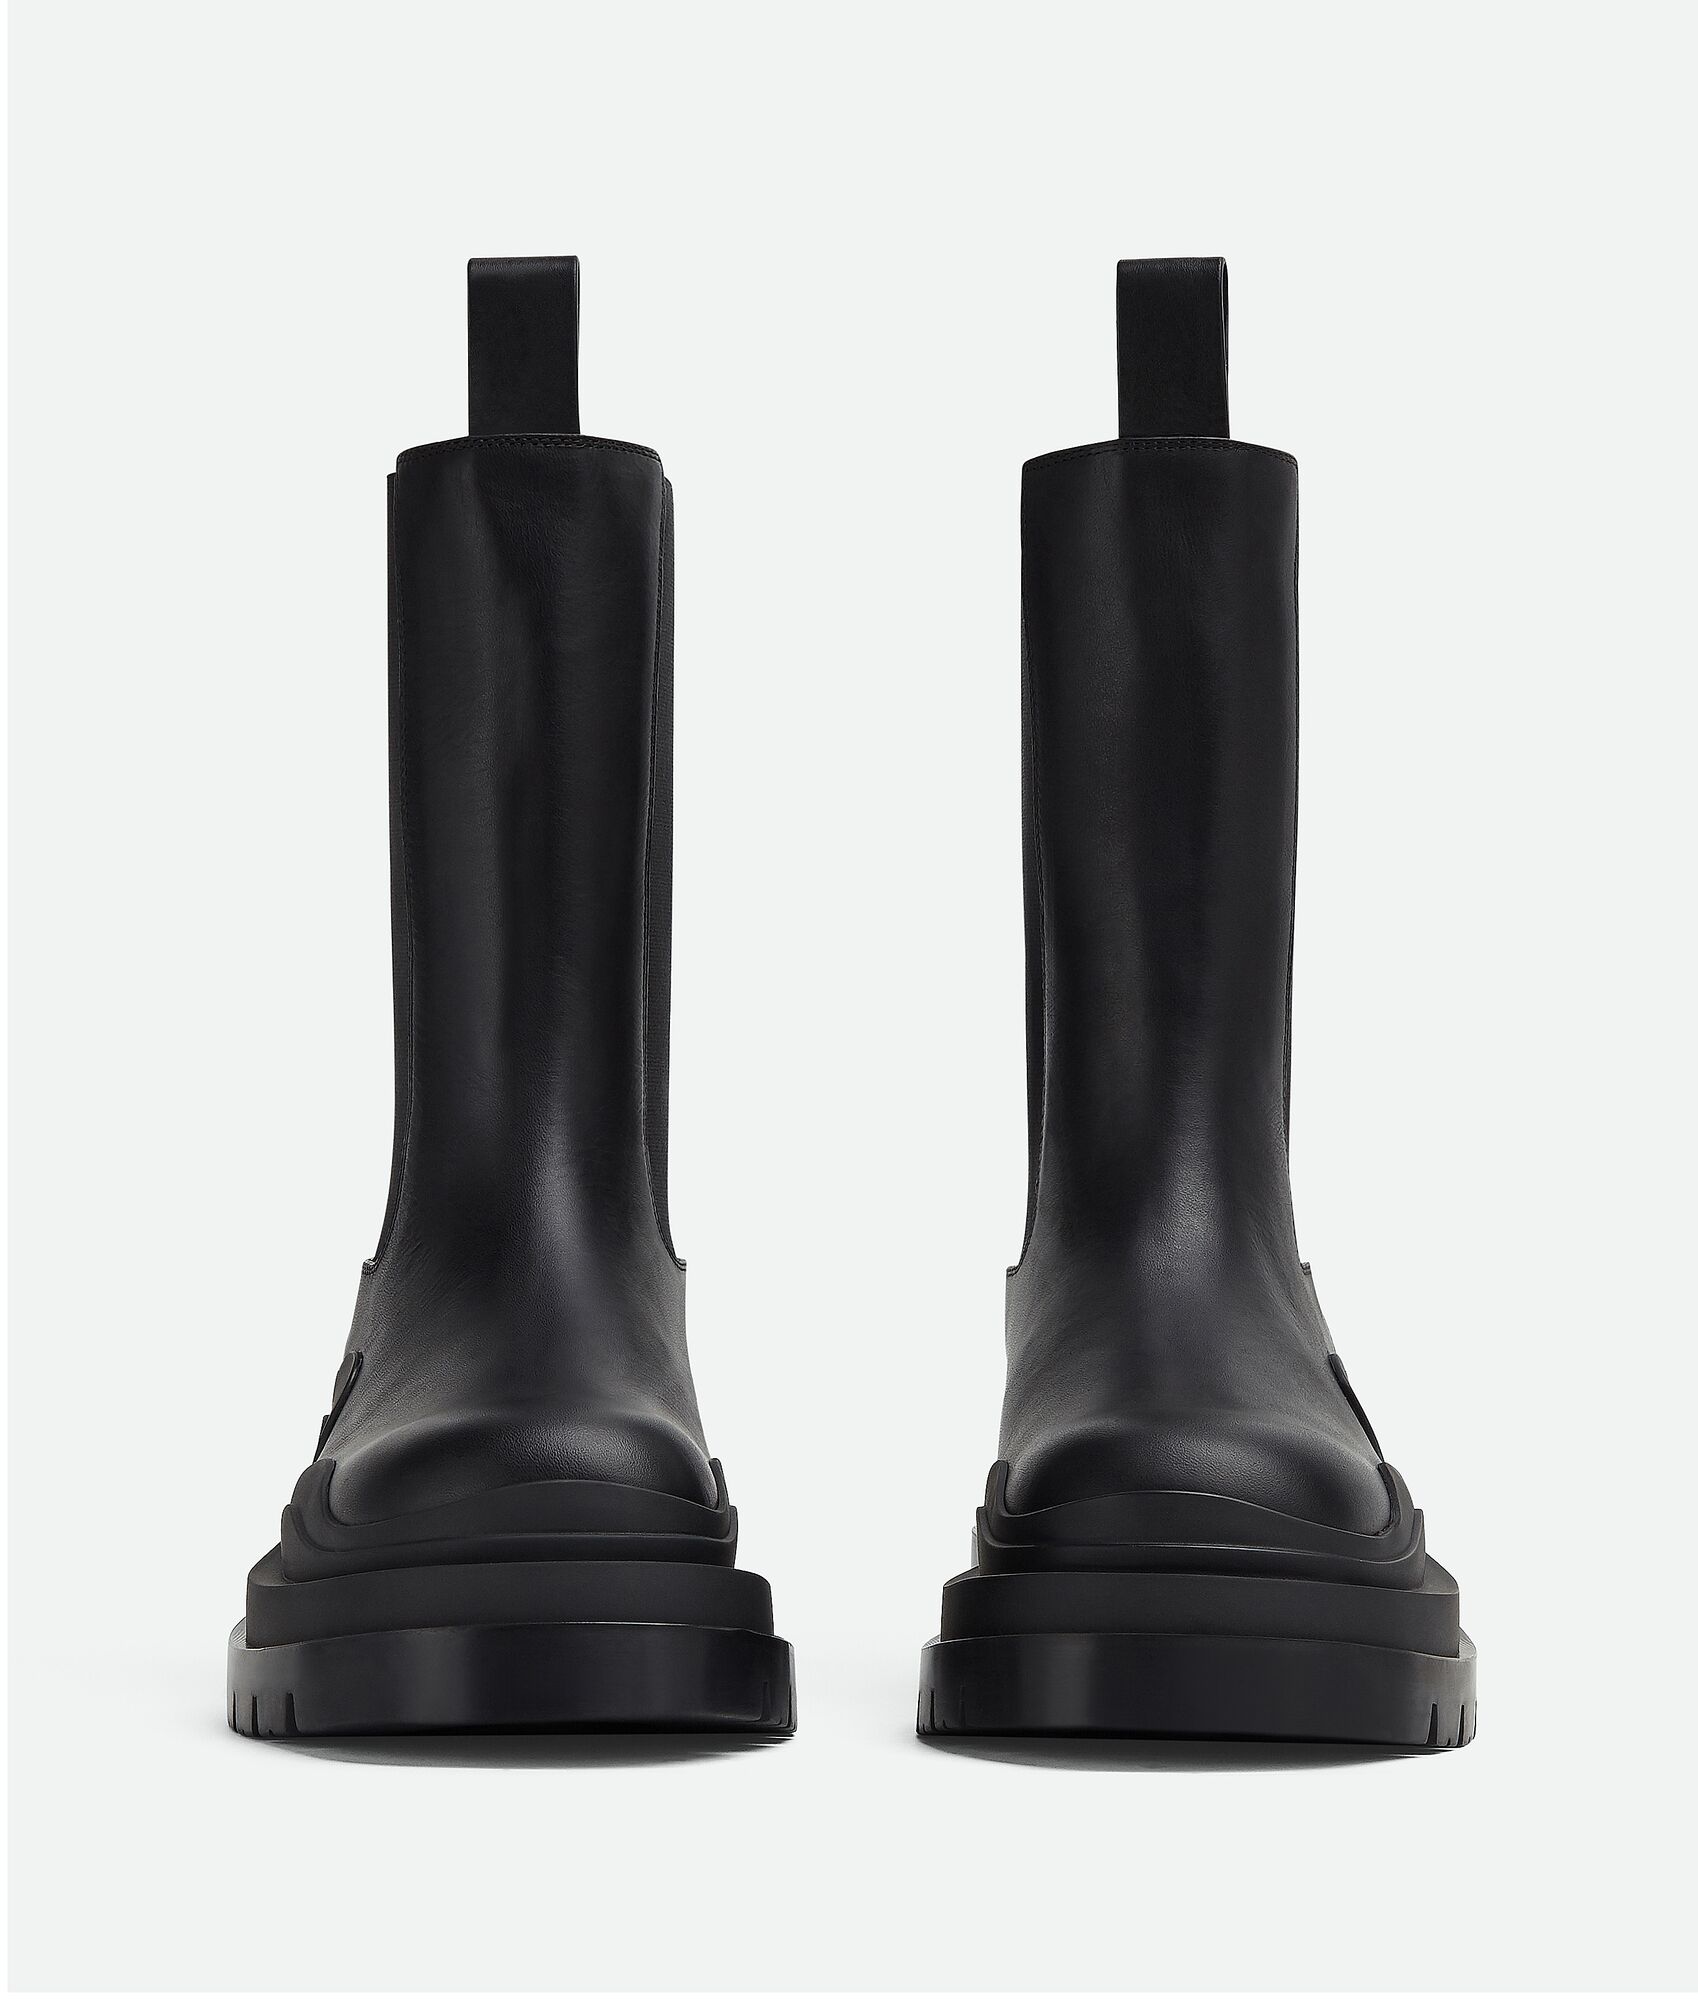 Bottega Veneta® Women's Lug Lace-Up Boot in Black. Shop online now.